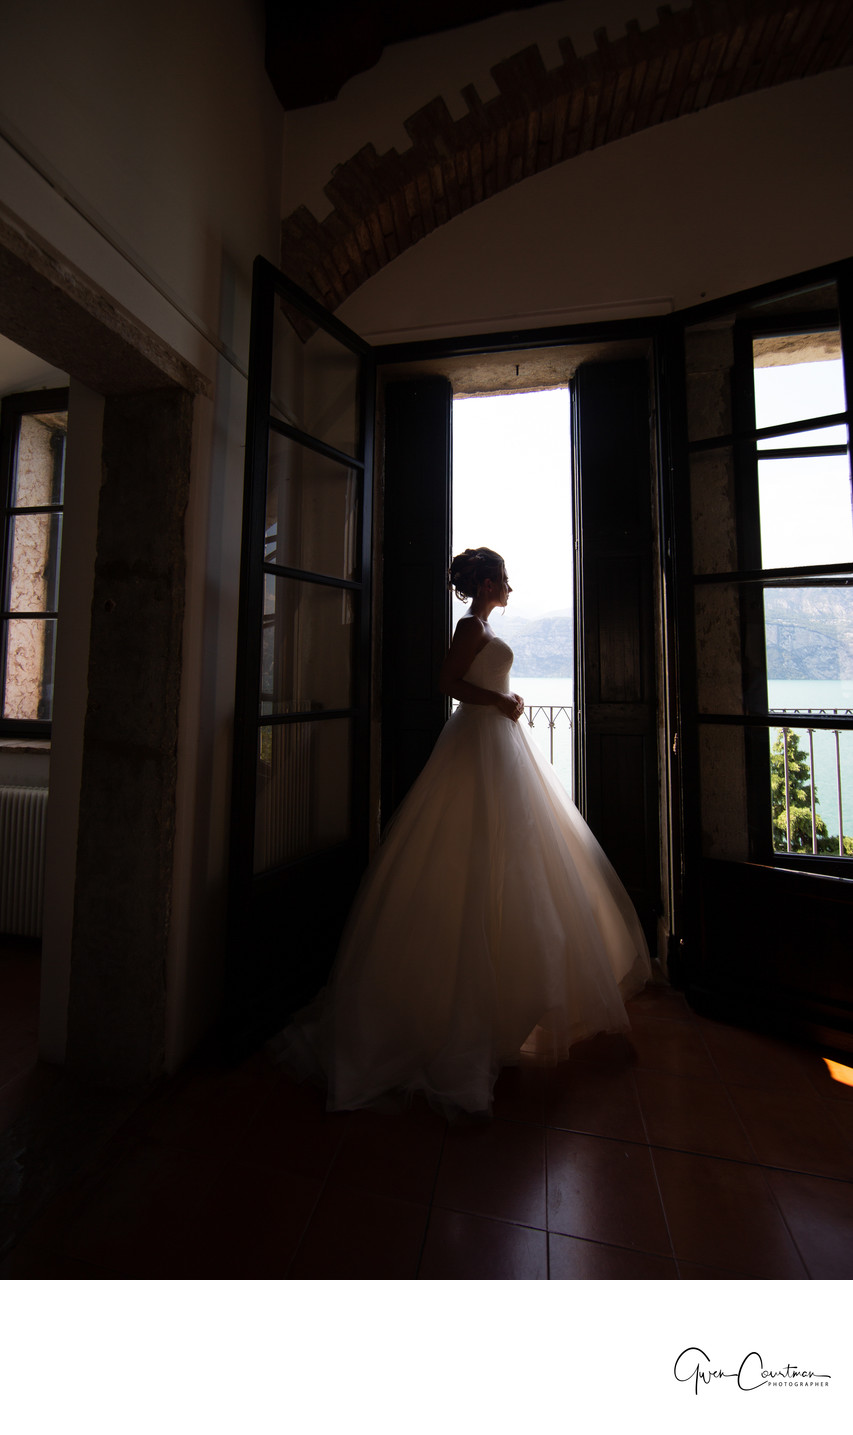 The thinking bride in a doorway in Malcesine Castle, IT